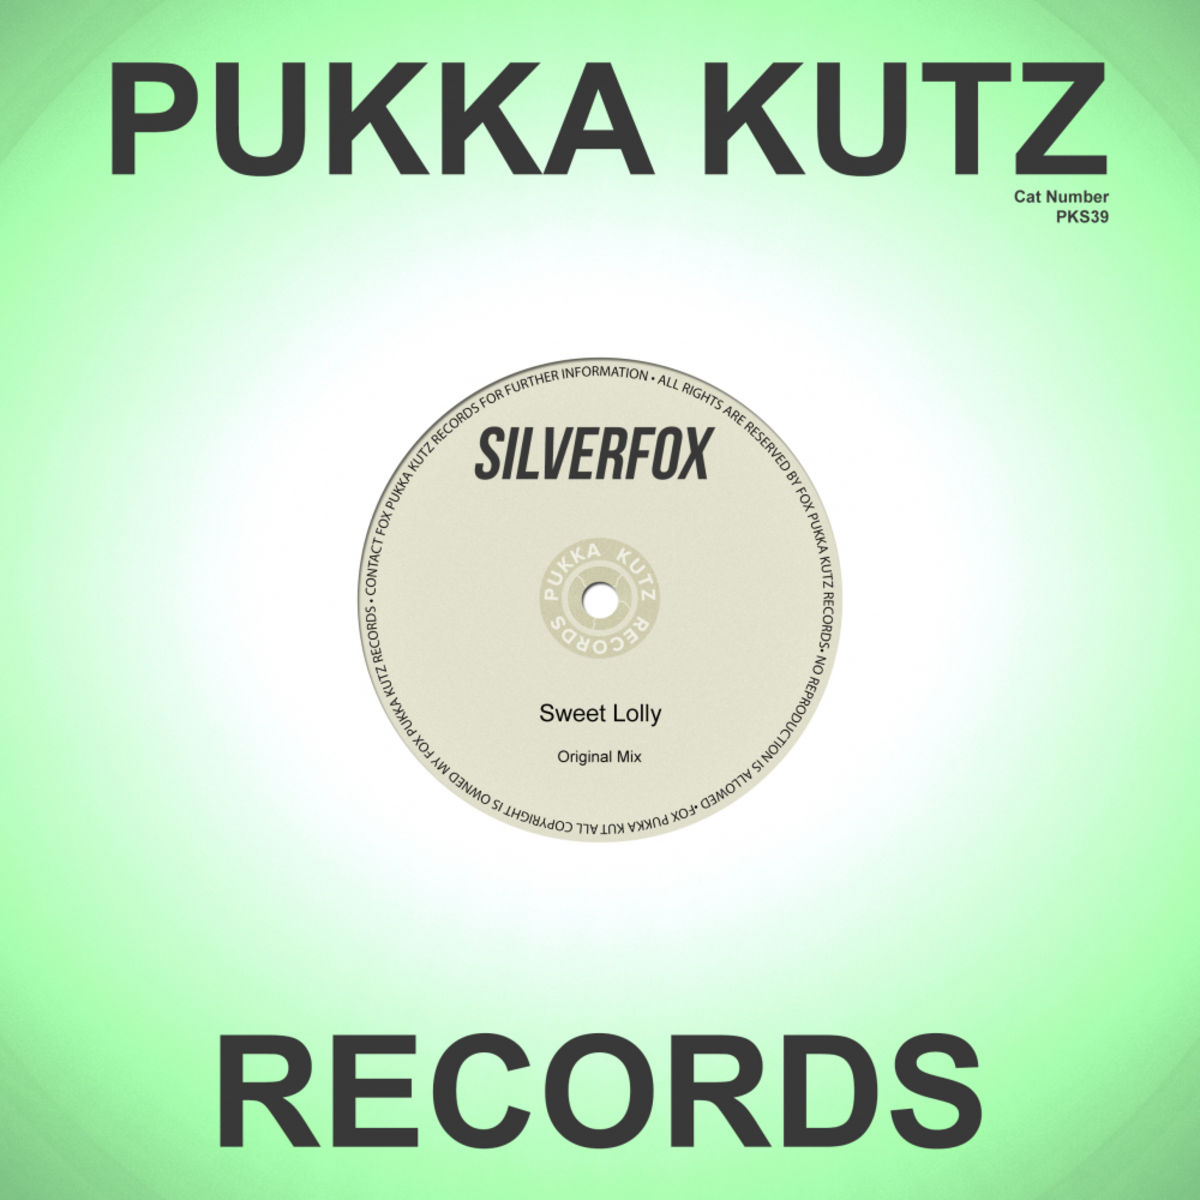 Silverfox - Sweet Lolly / Fox Pukka Kutz Records